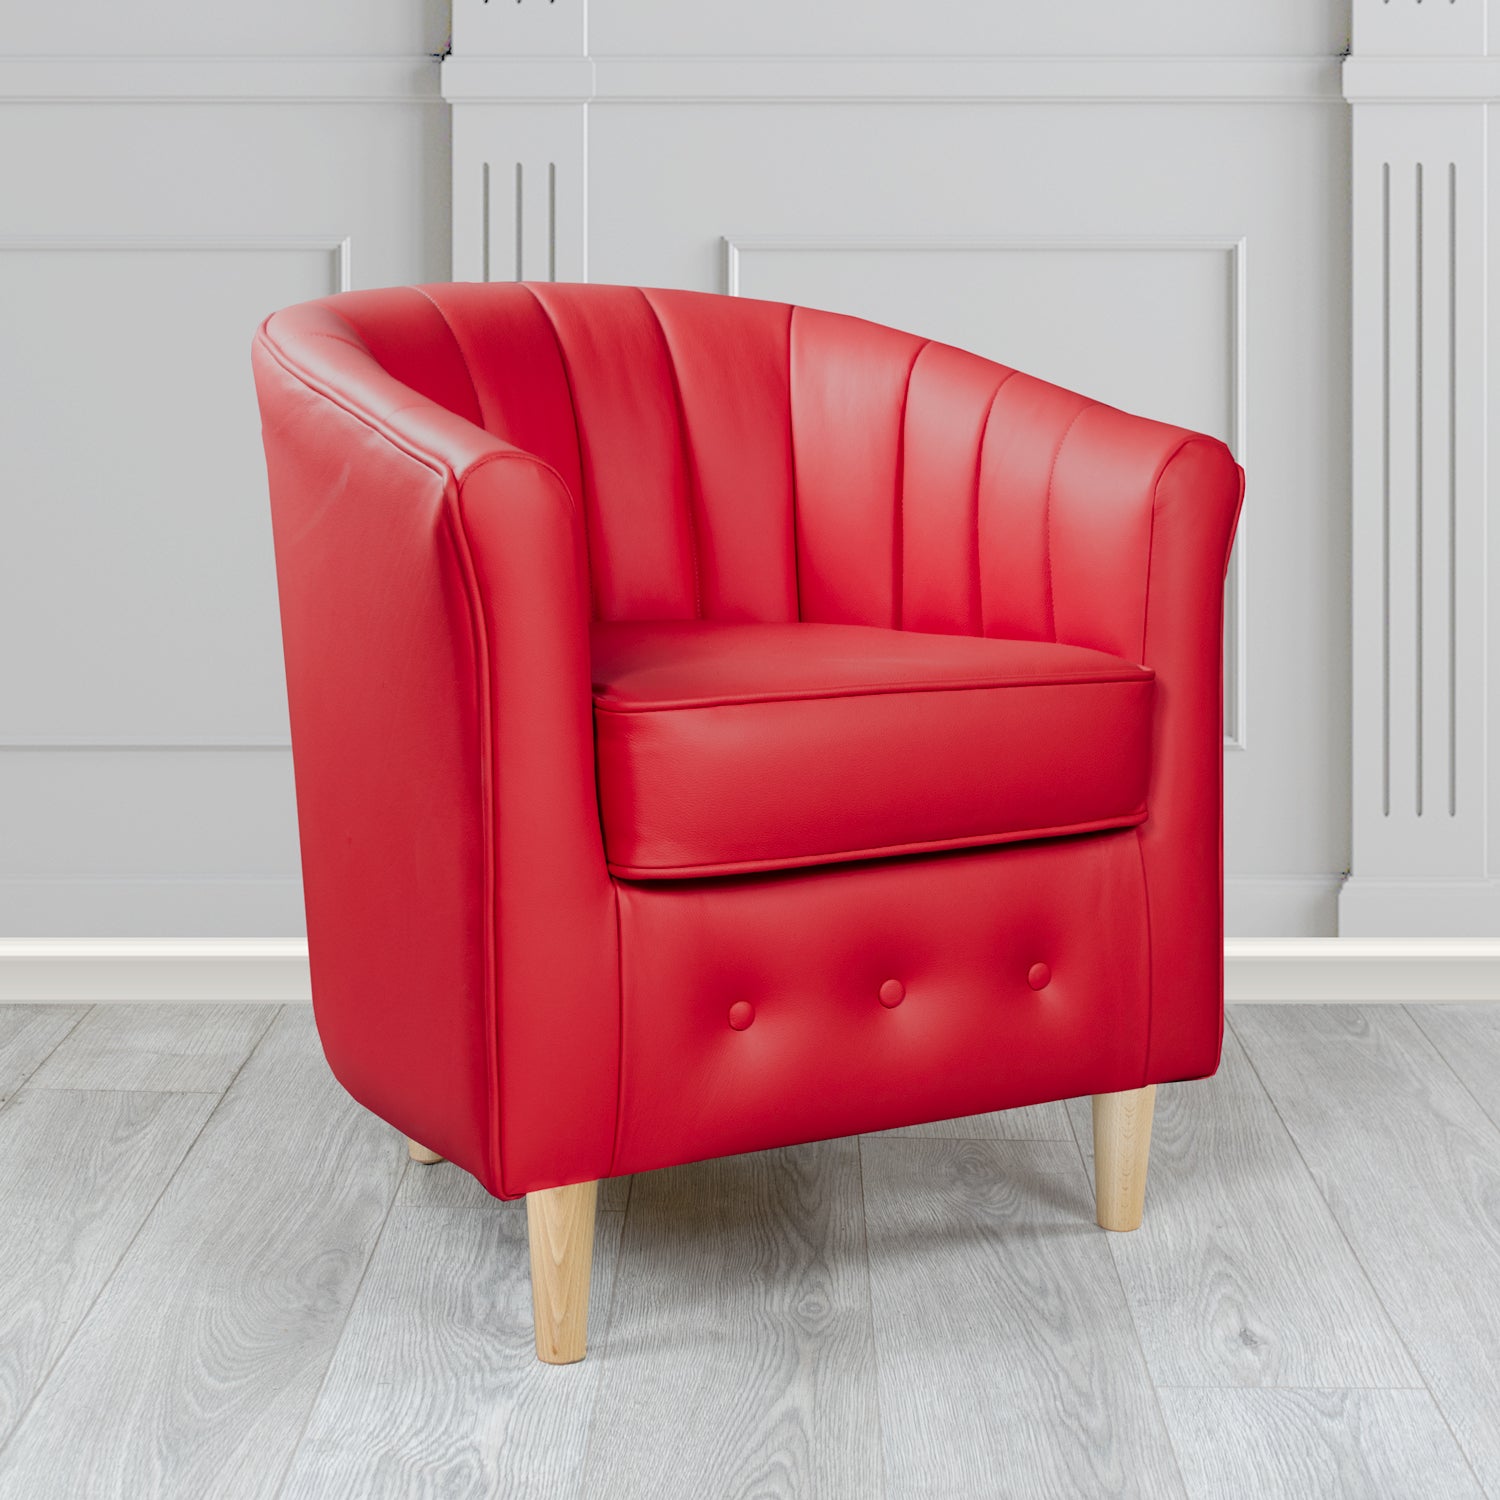 Doha Tub Chair in Vele Scarlet Crib 5 Genuine Leather